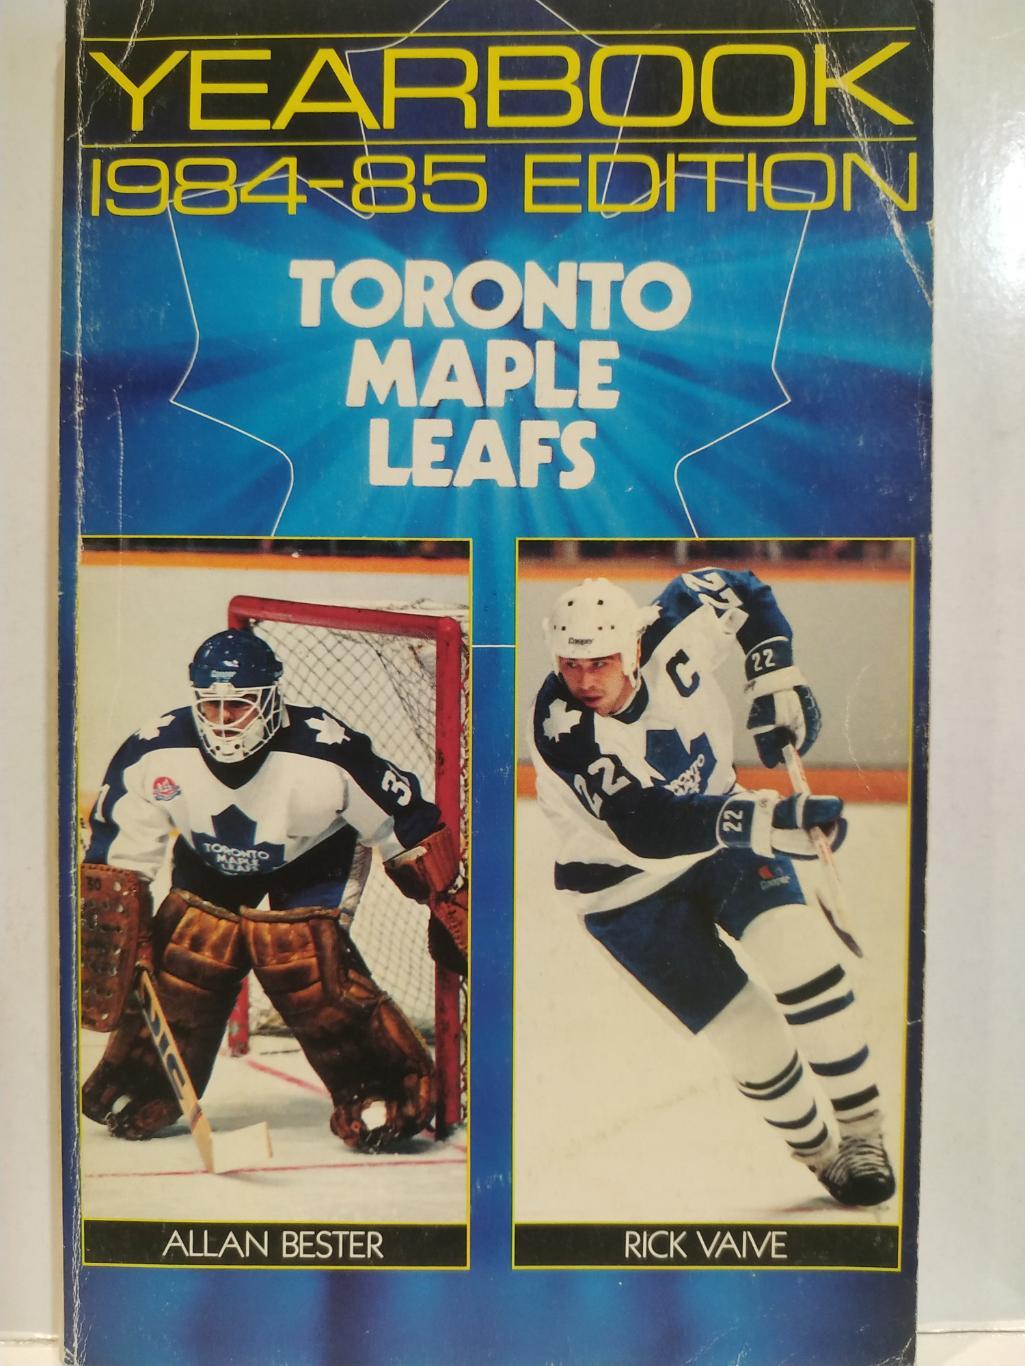 ХОККЕЙ СПРАВОЧНИК ЕЖЕГОДНИК НХЛ ТОРОНТО 1984-85 TORONTO MAPLE LEAFS YEARBOOK